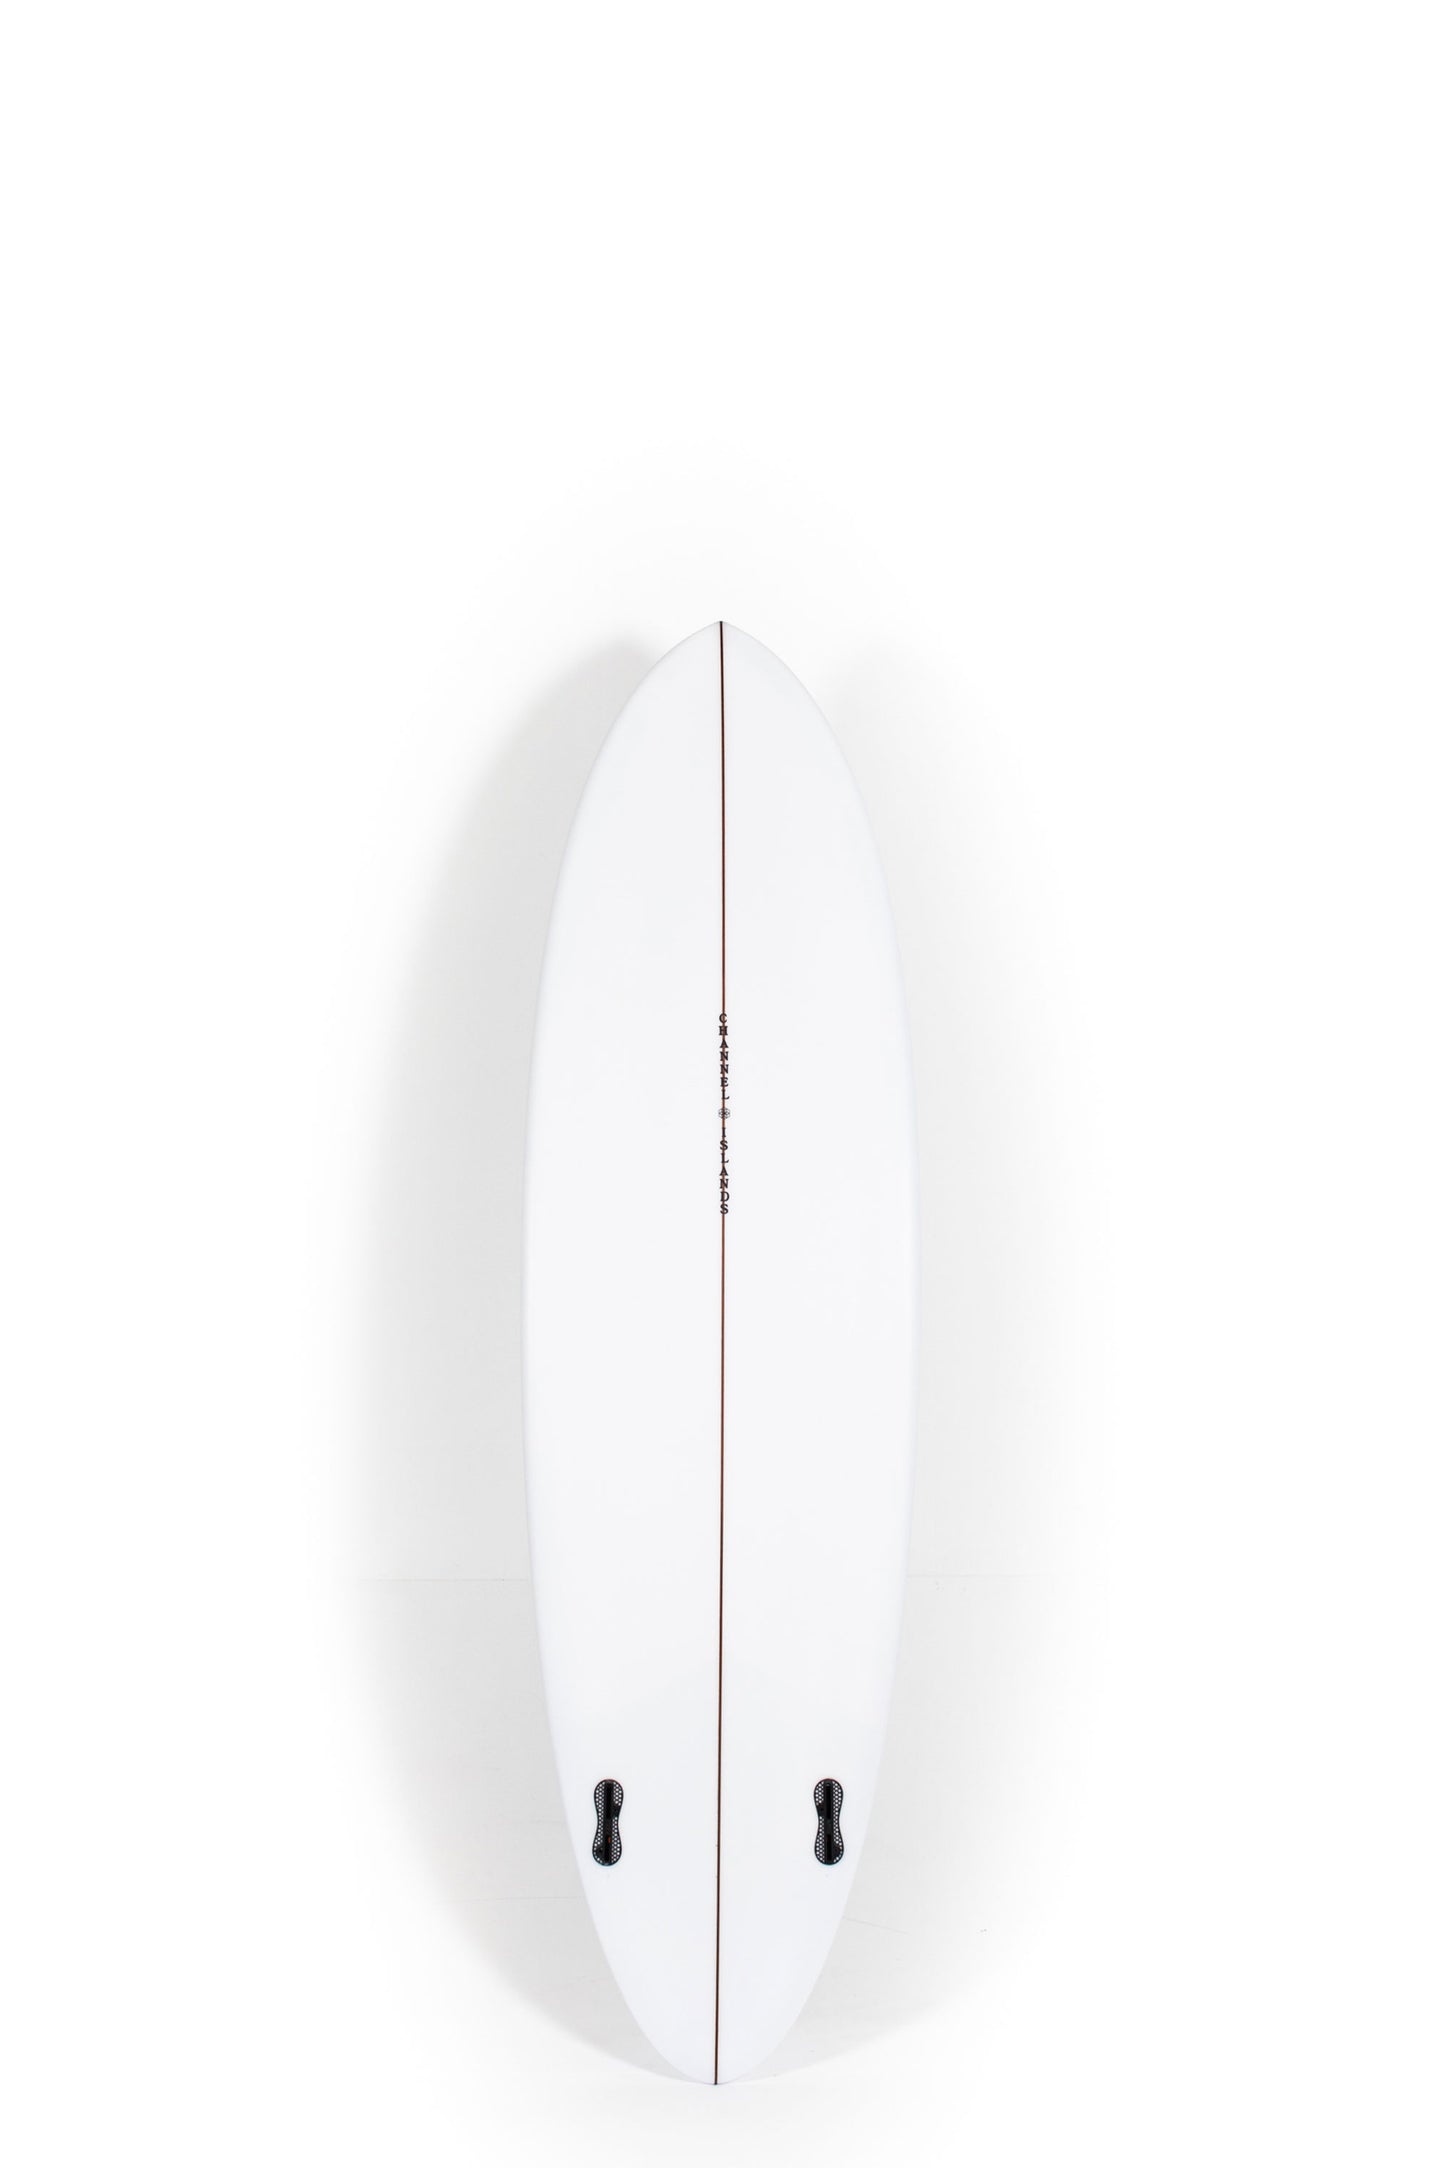 Pukas Surf Shop - Channel Islands - CI MID TWIN - 6'4" x 20 3/4 x 2 5/8 - 38L - CI28125